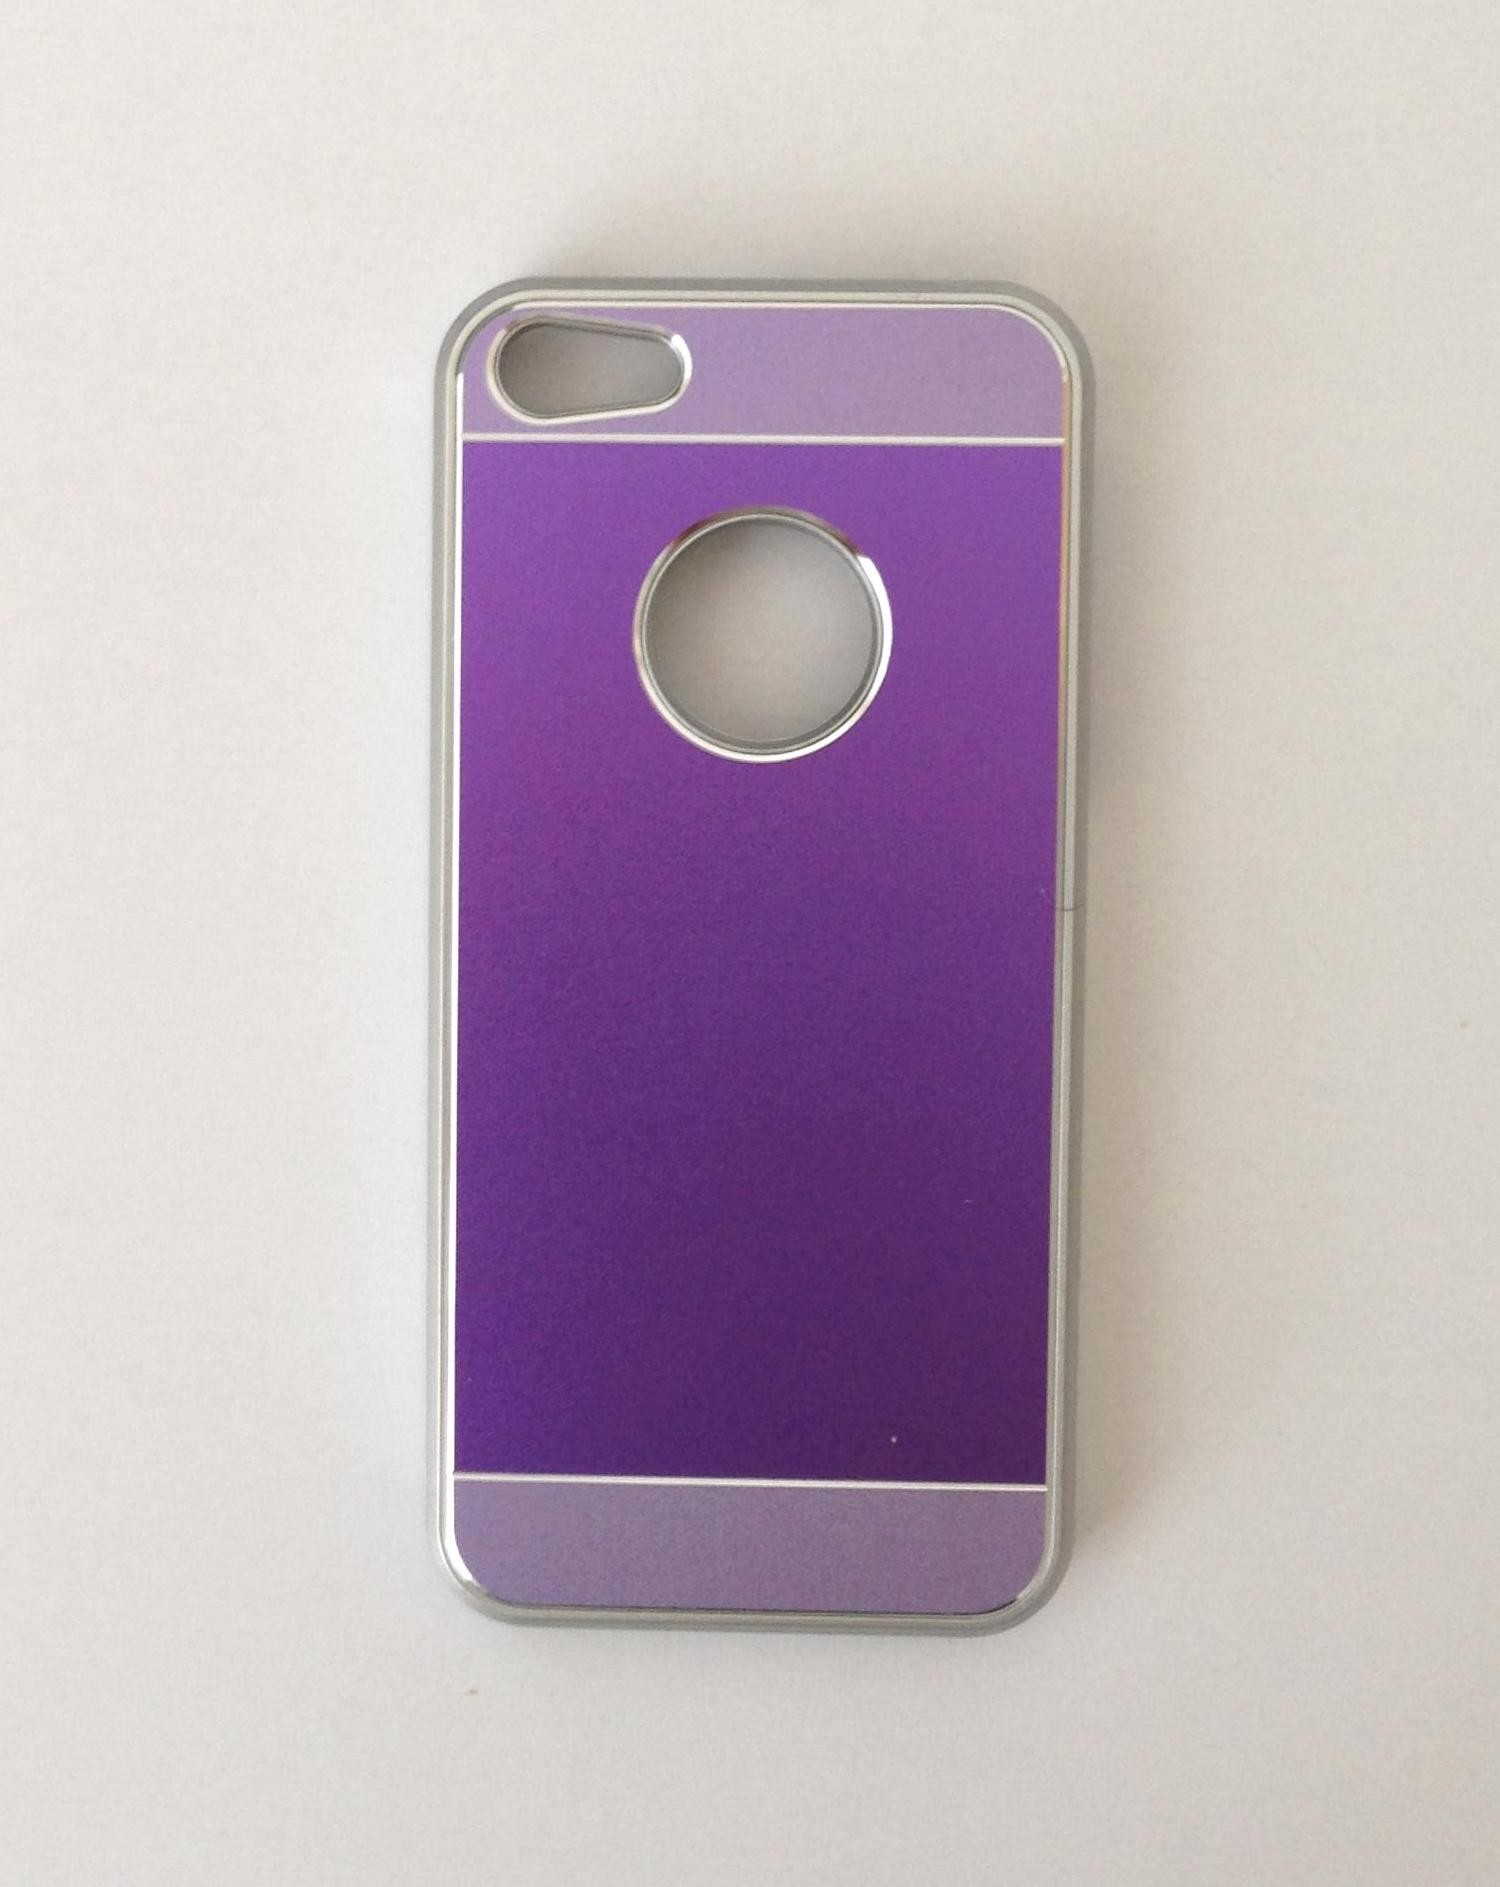 Metal Hardshell pouzdro pro iPhone 5, fialové